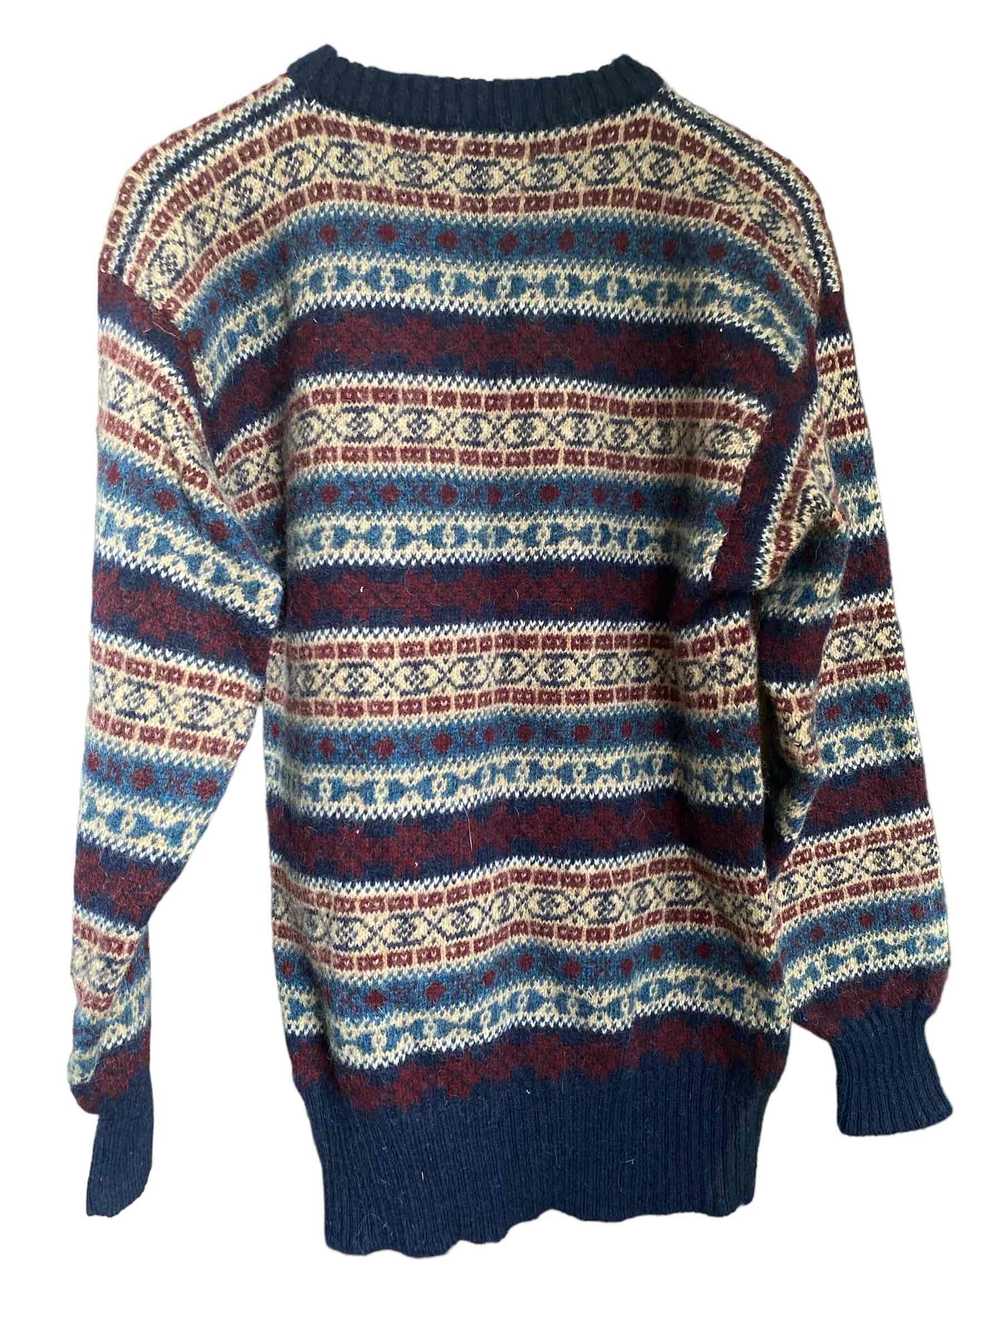 Woolen sweater - image 2